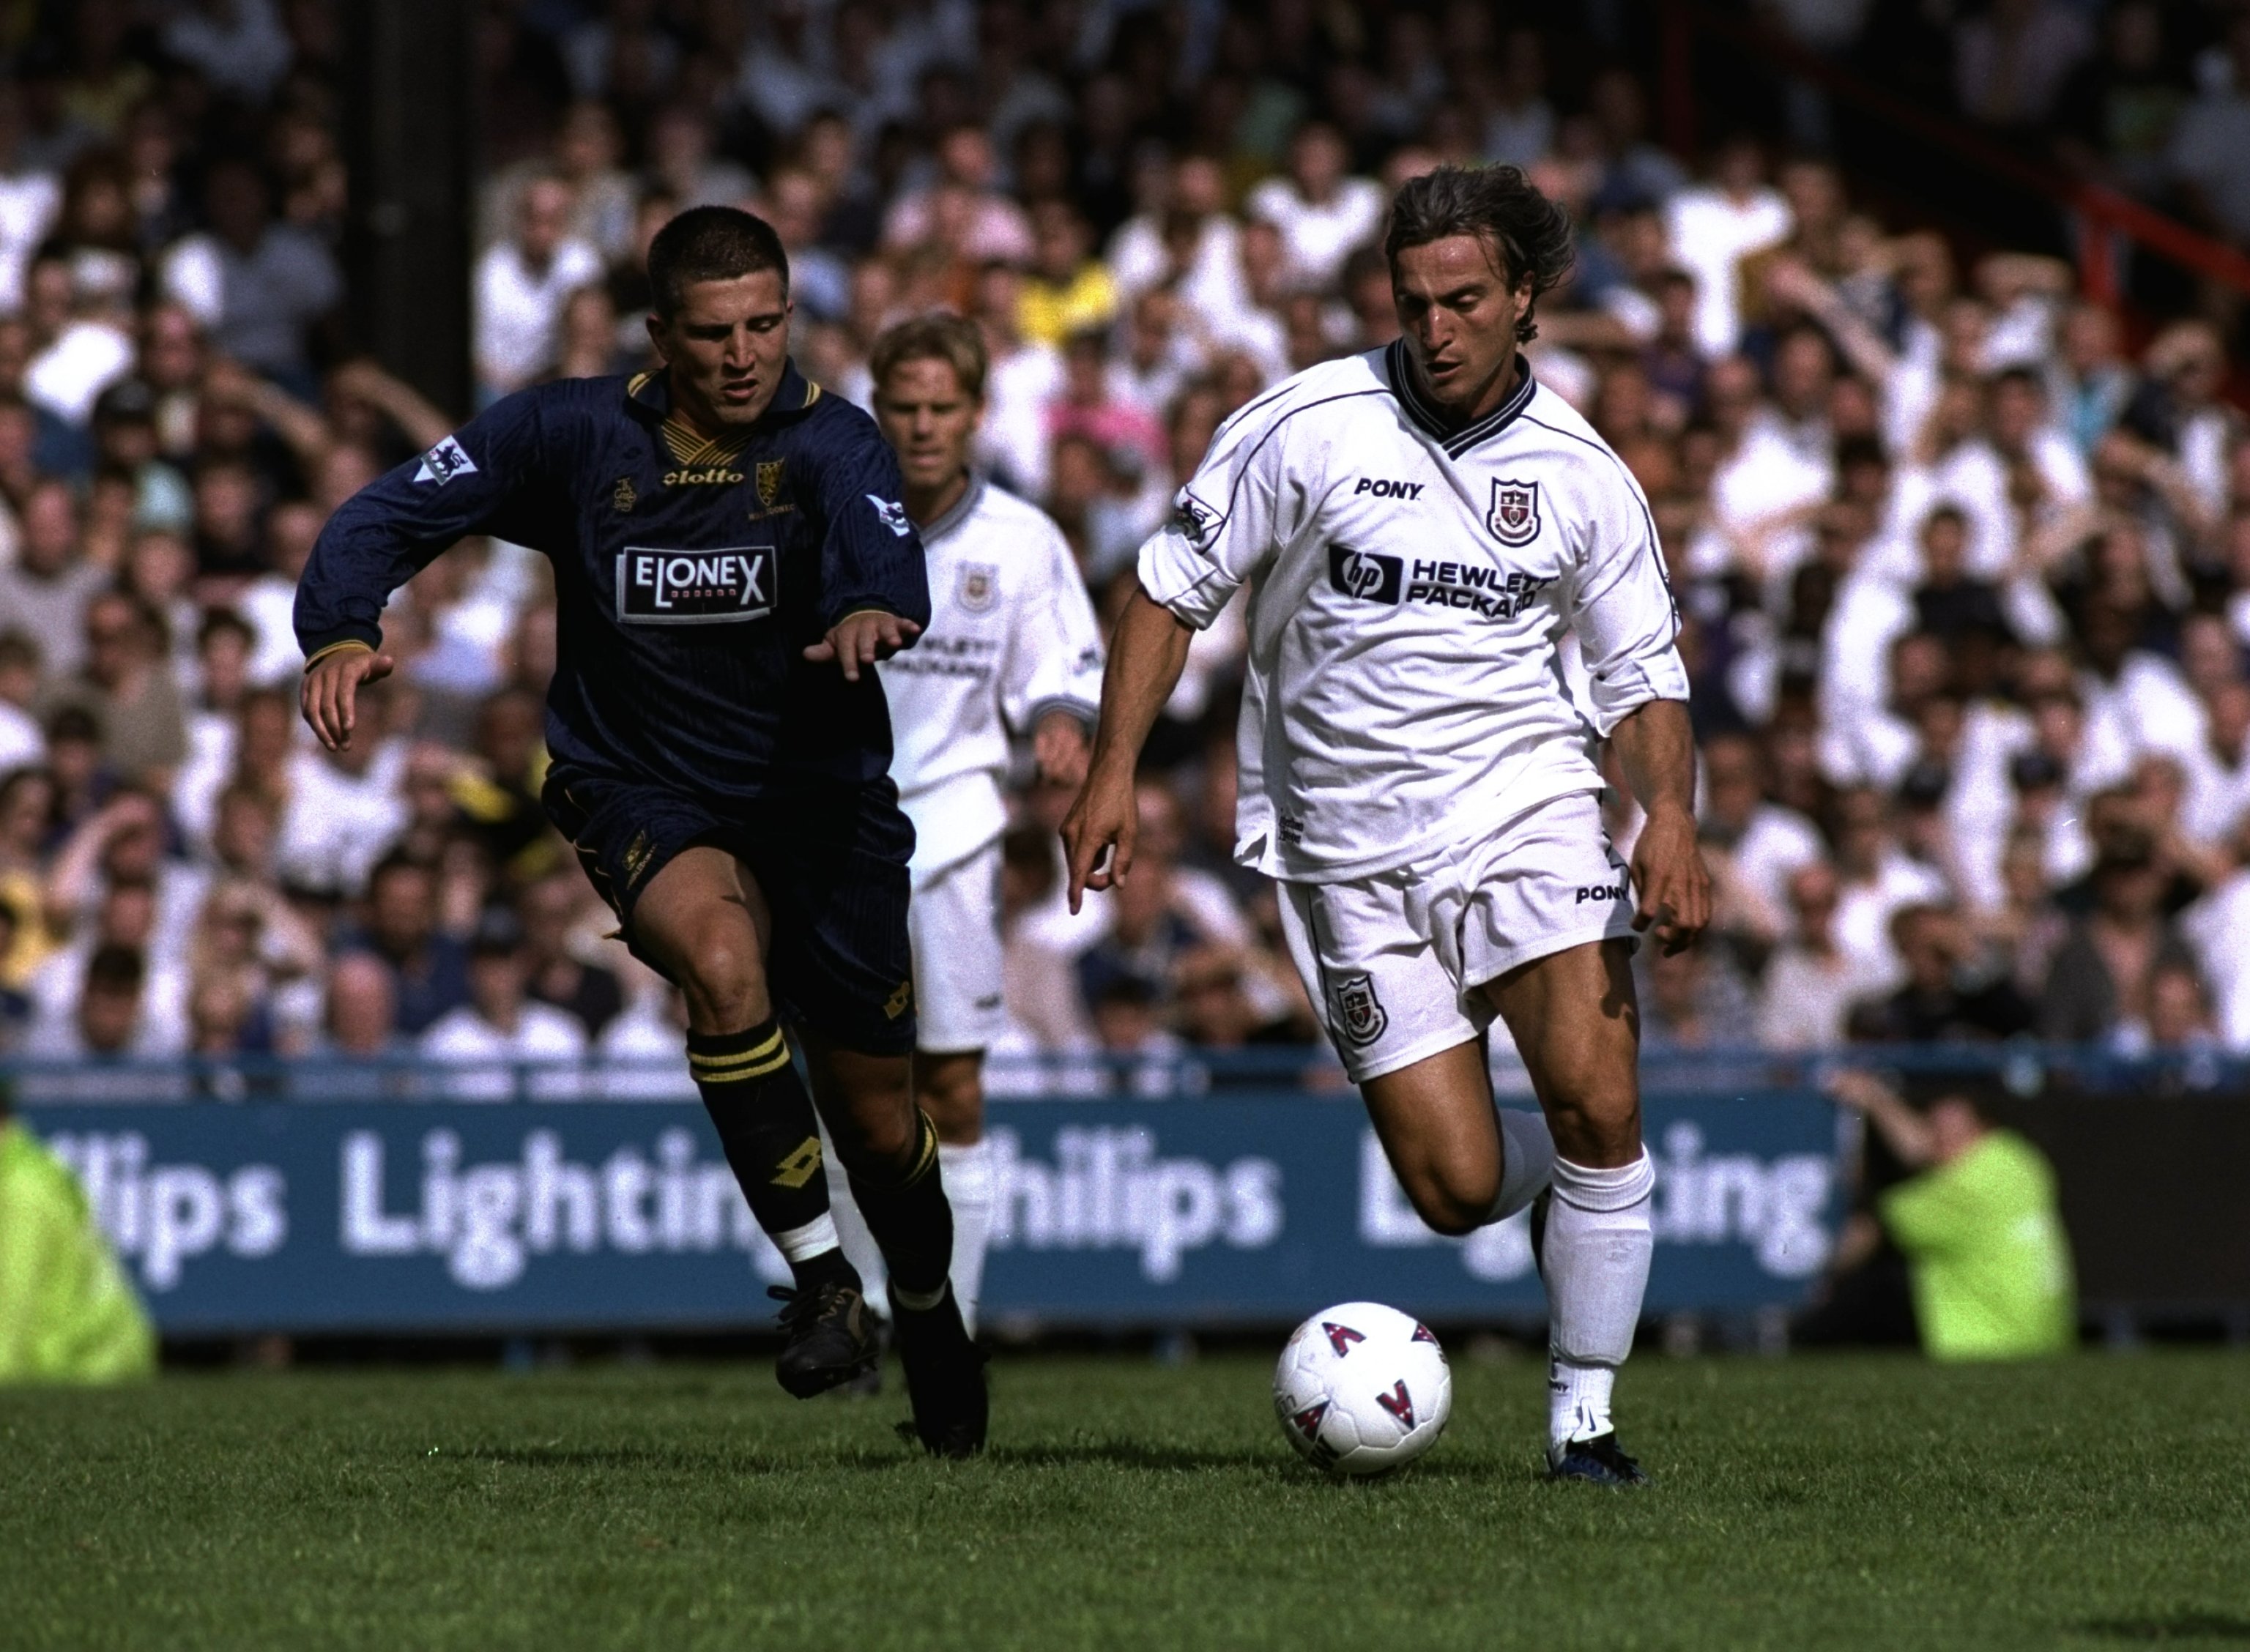 David Ginola in action for Tottenham against Wimbledon in 1998.